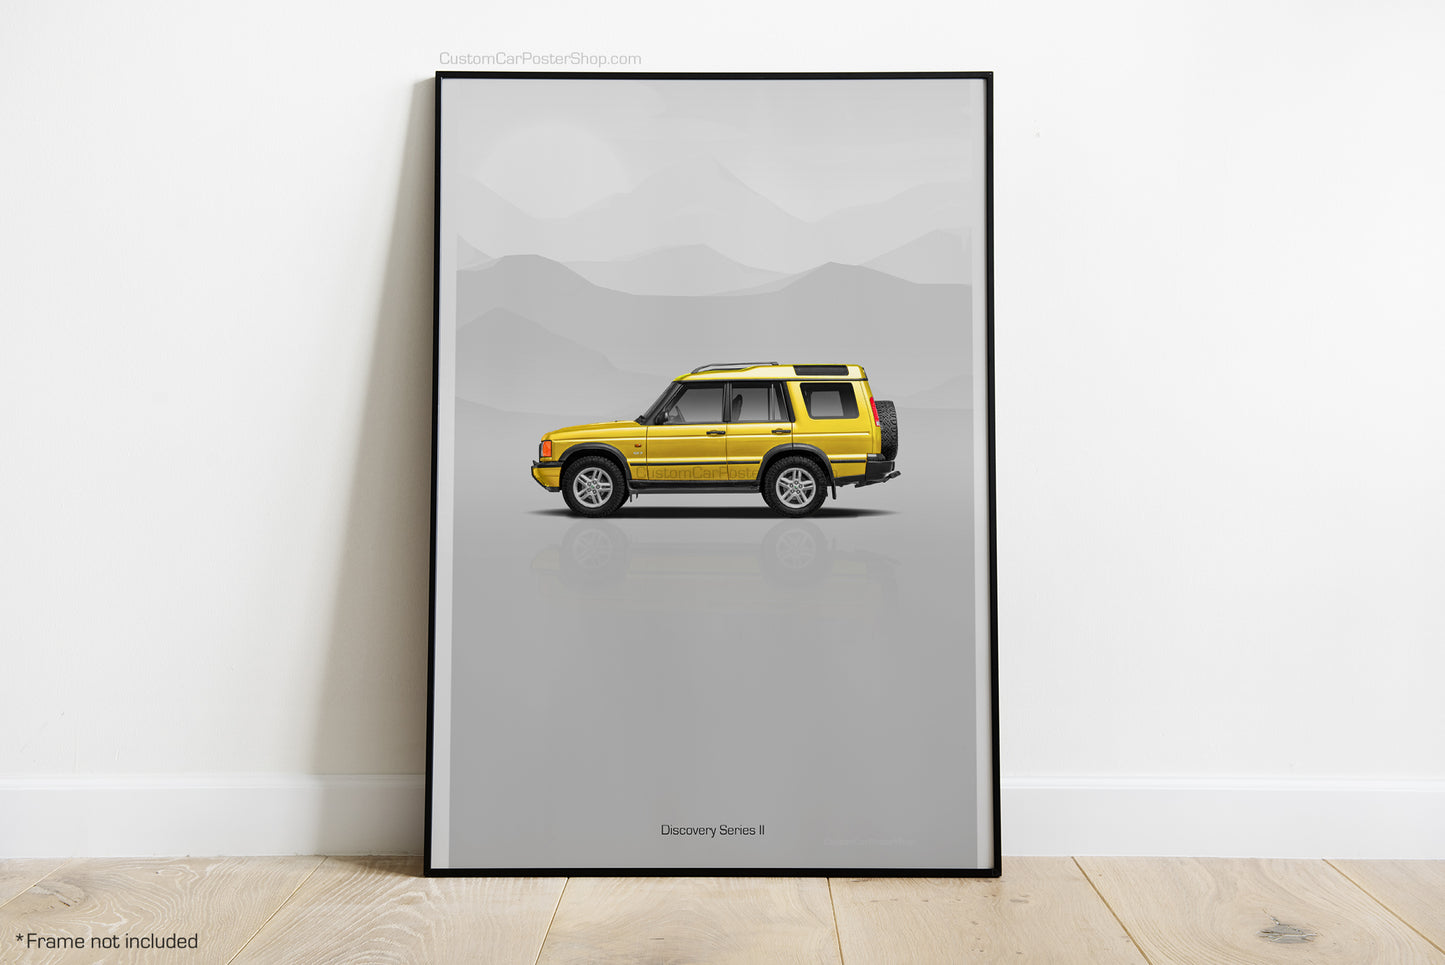 Discovery Series II Land Rover Wall Art - 4x4 Art